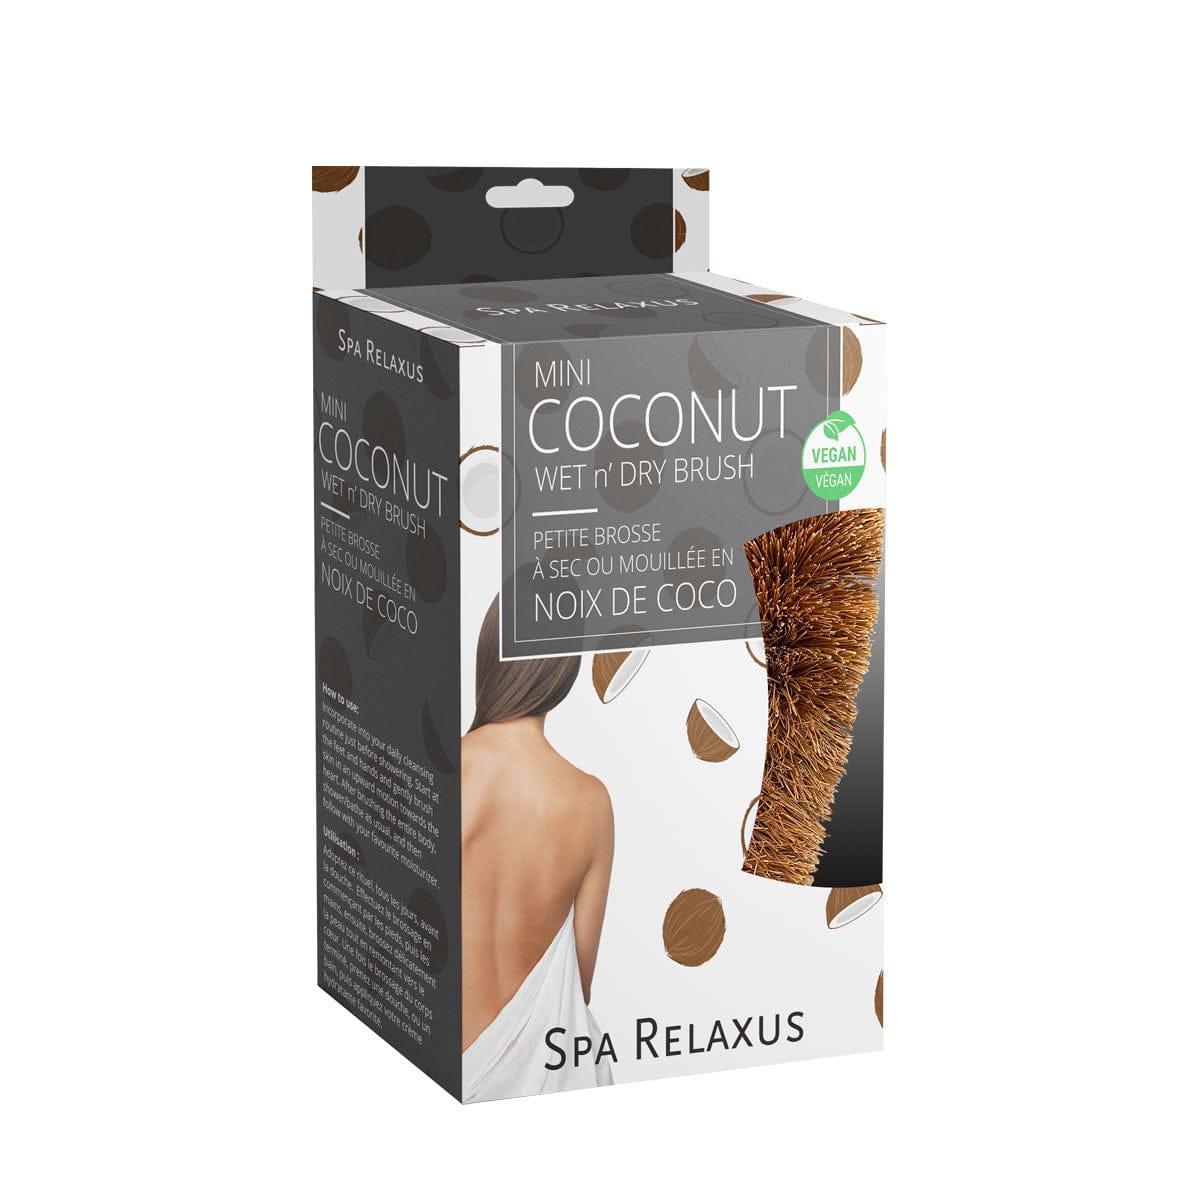 Wholesale Coconut Wet n' Dry Brush Mini